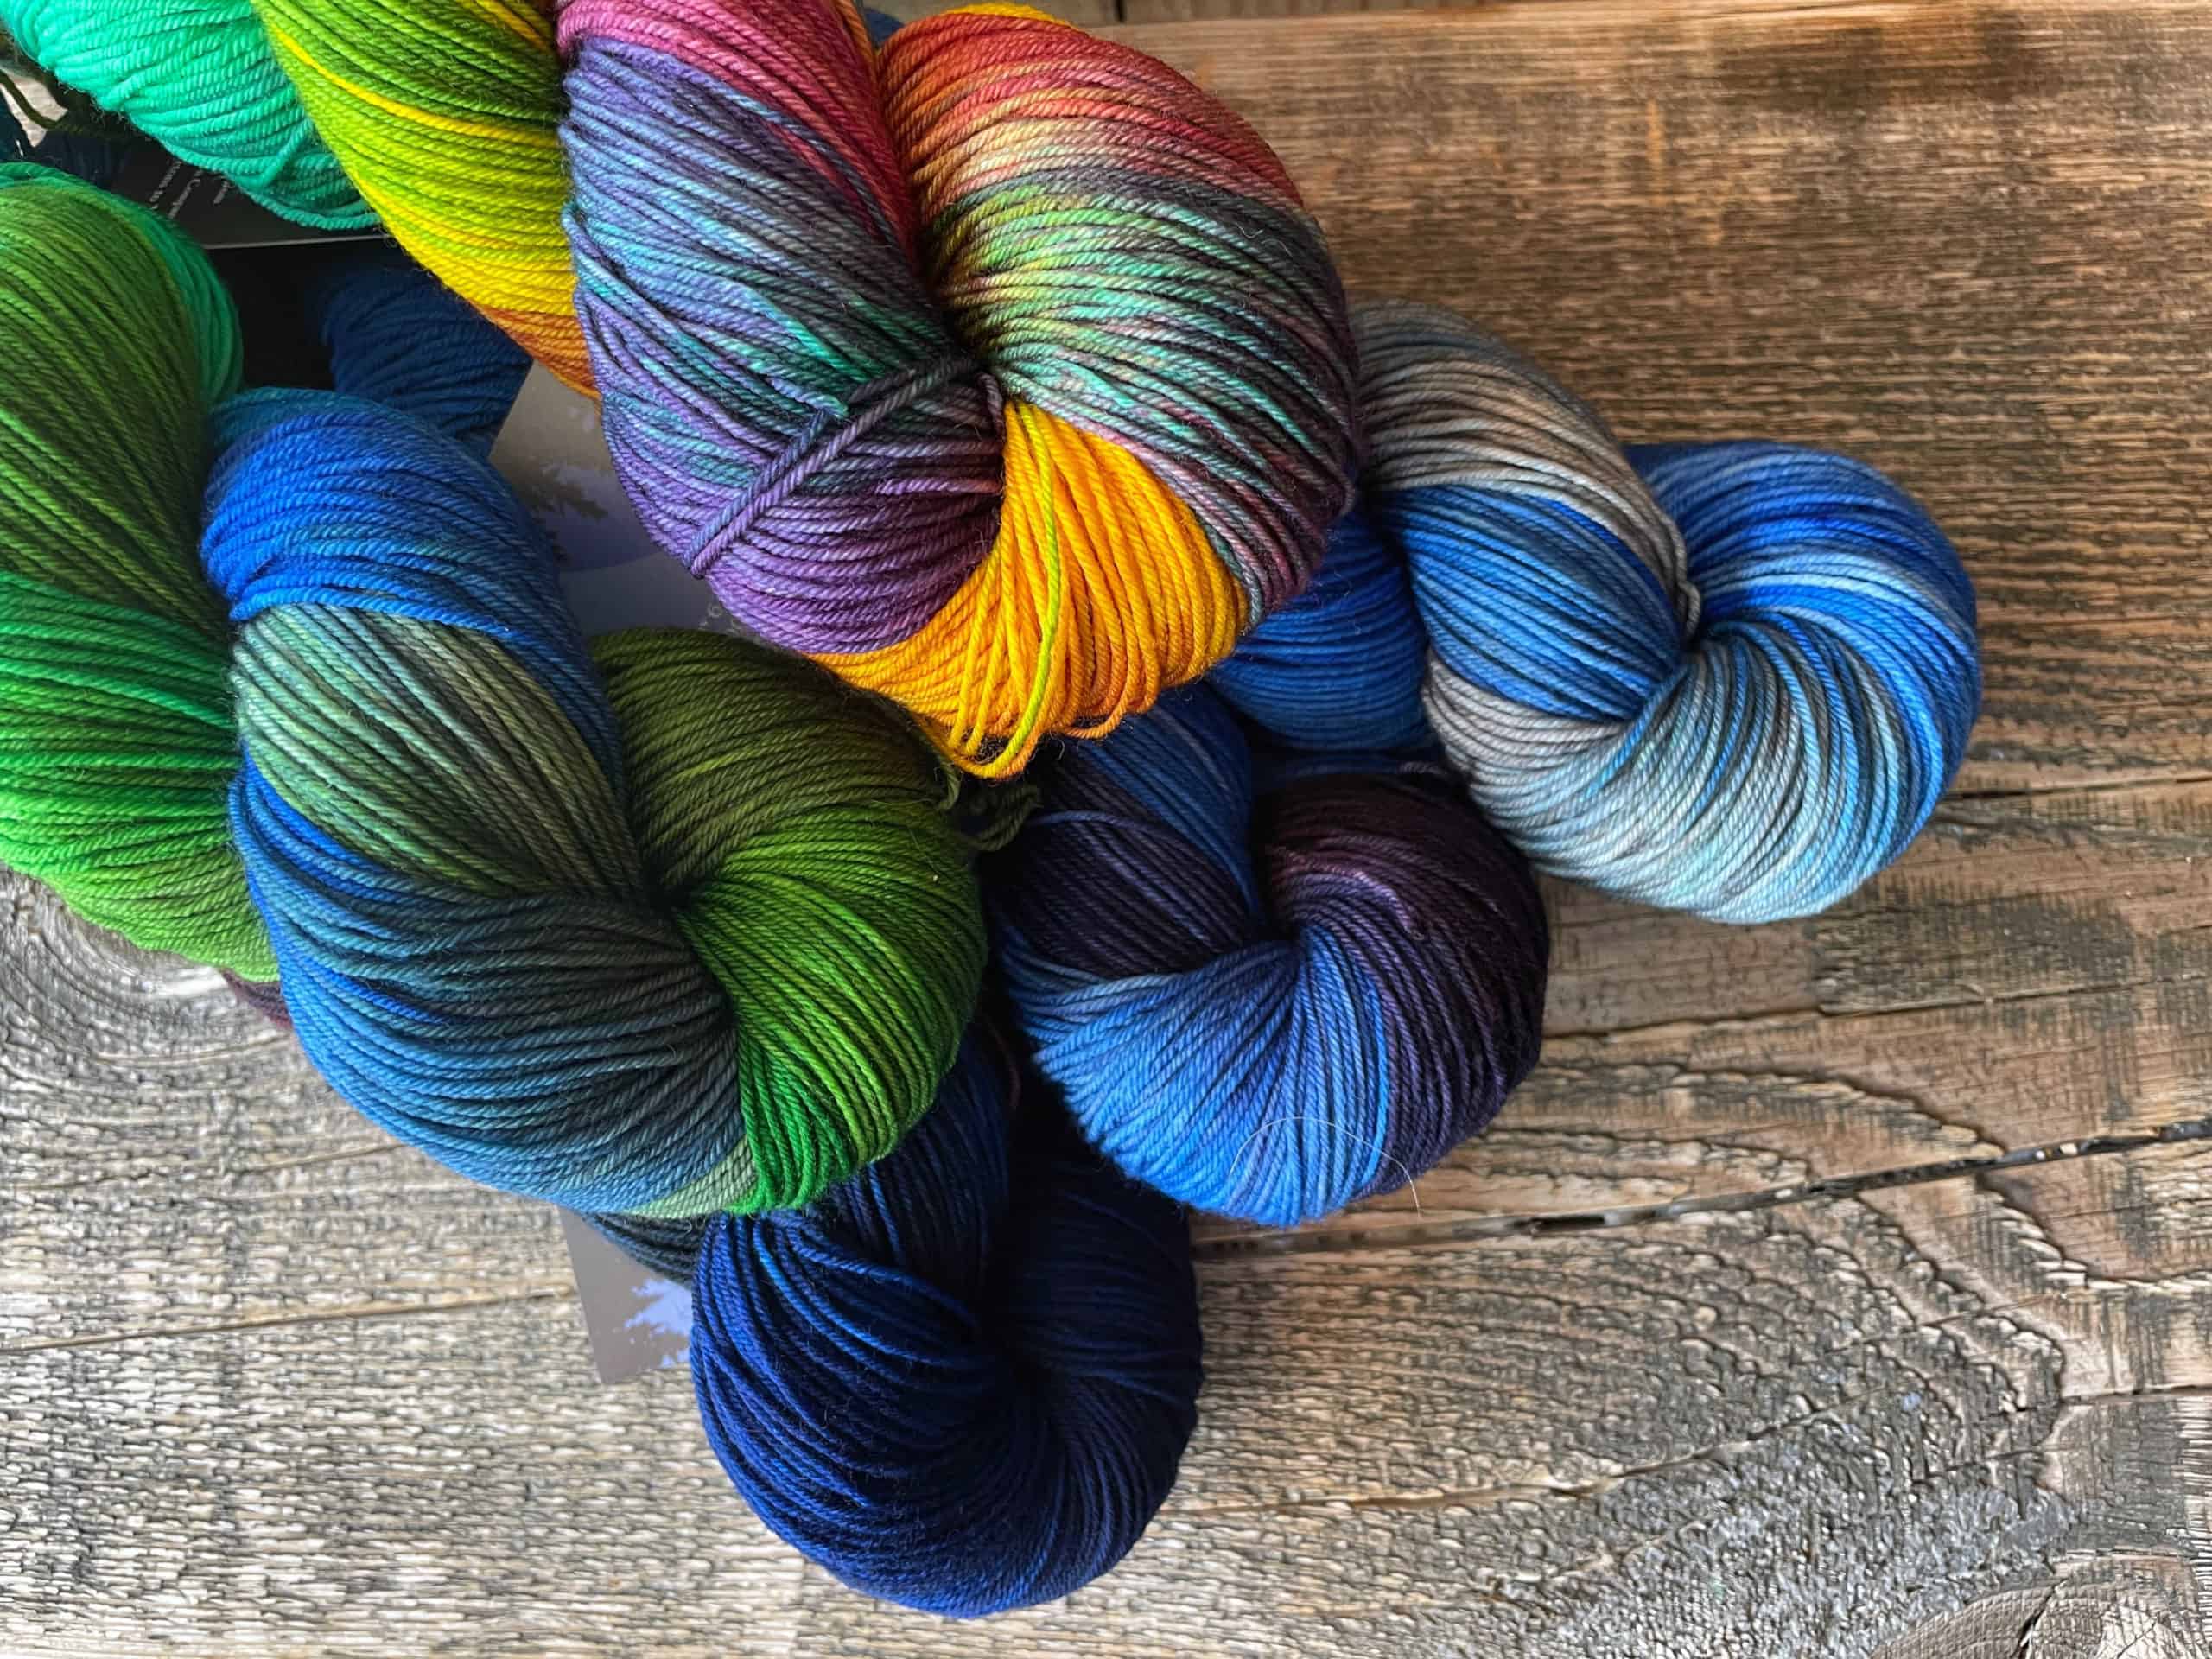 Blue, green and orange hand-dyed yarn.